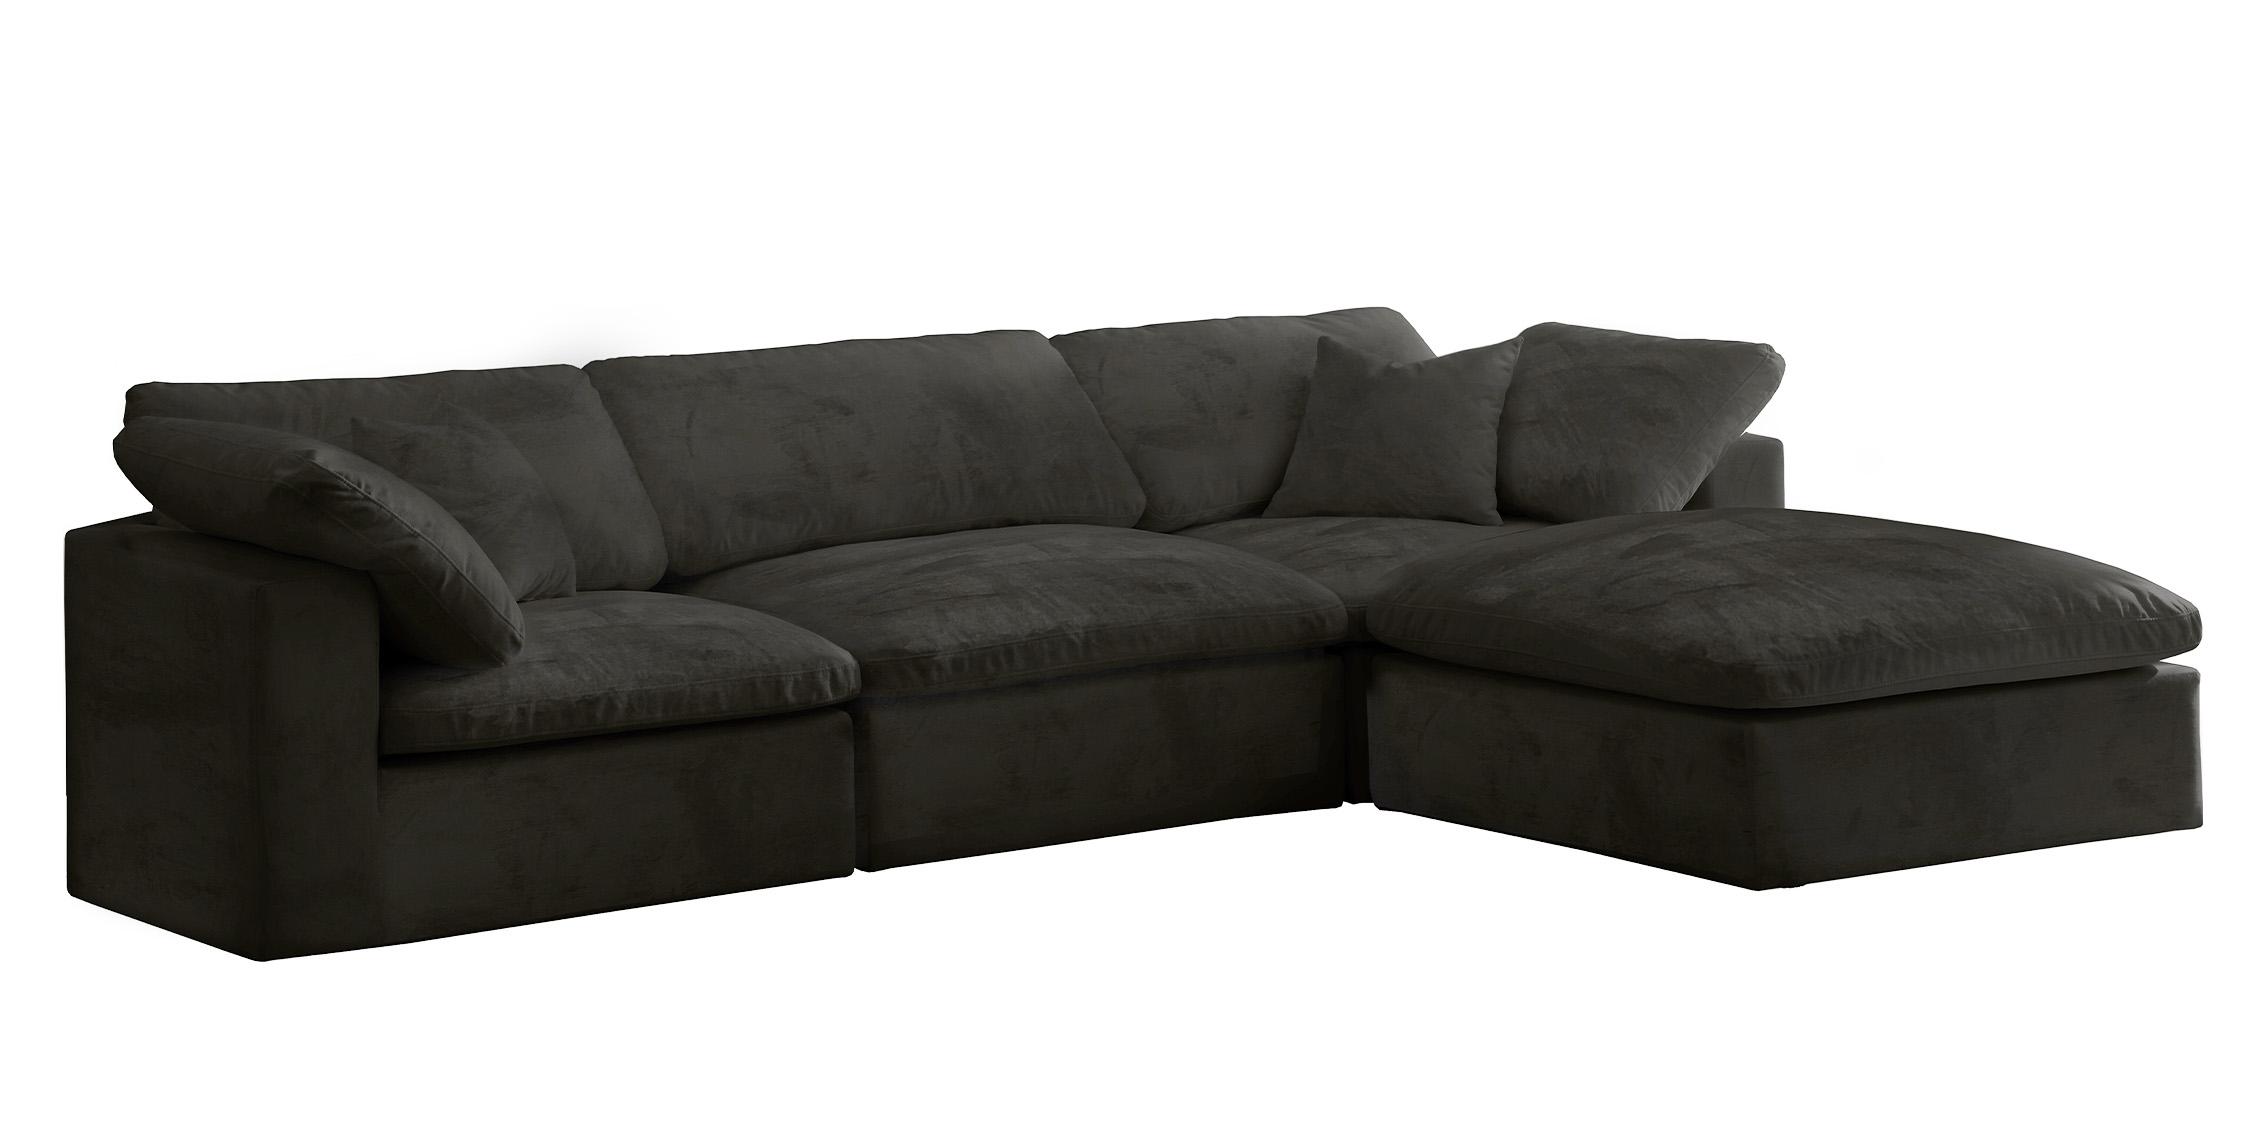 Contemporary, Modern Modular Sectional Sofa 634Black-Sec4A 634Black-Sec4A in Black Fabric